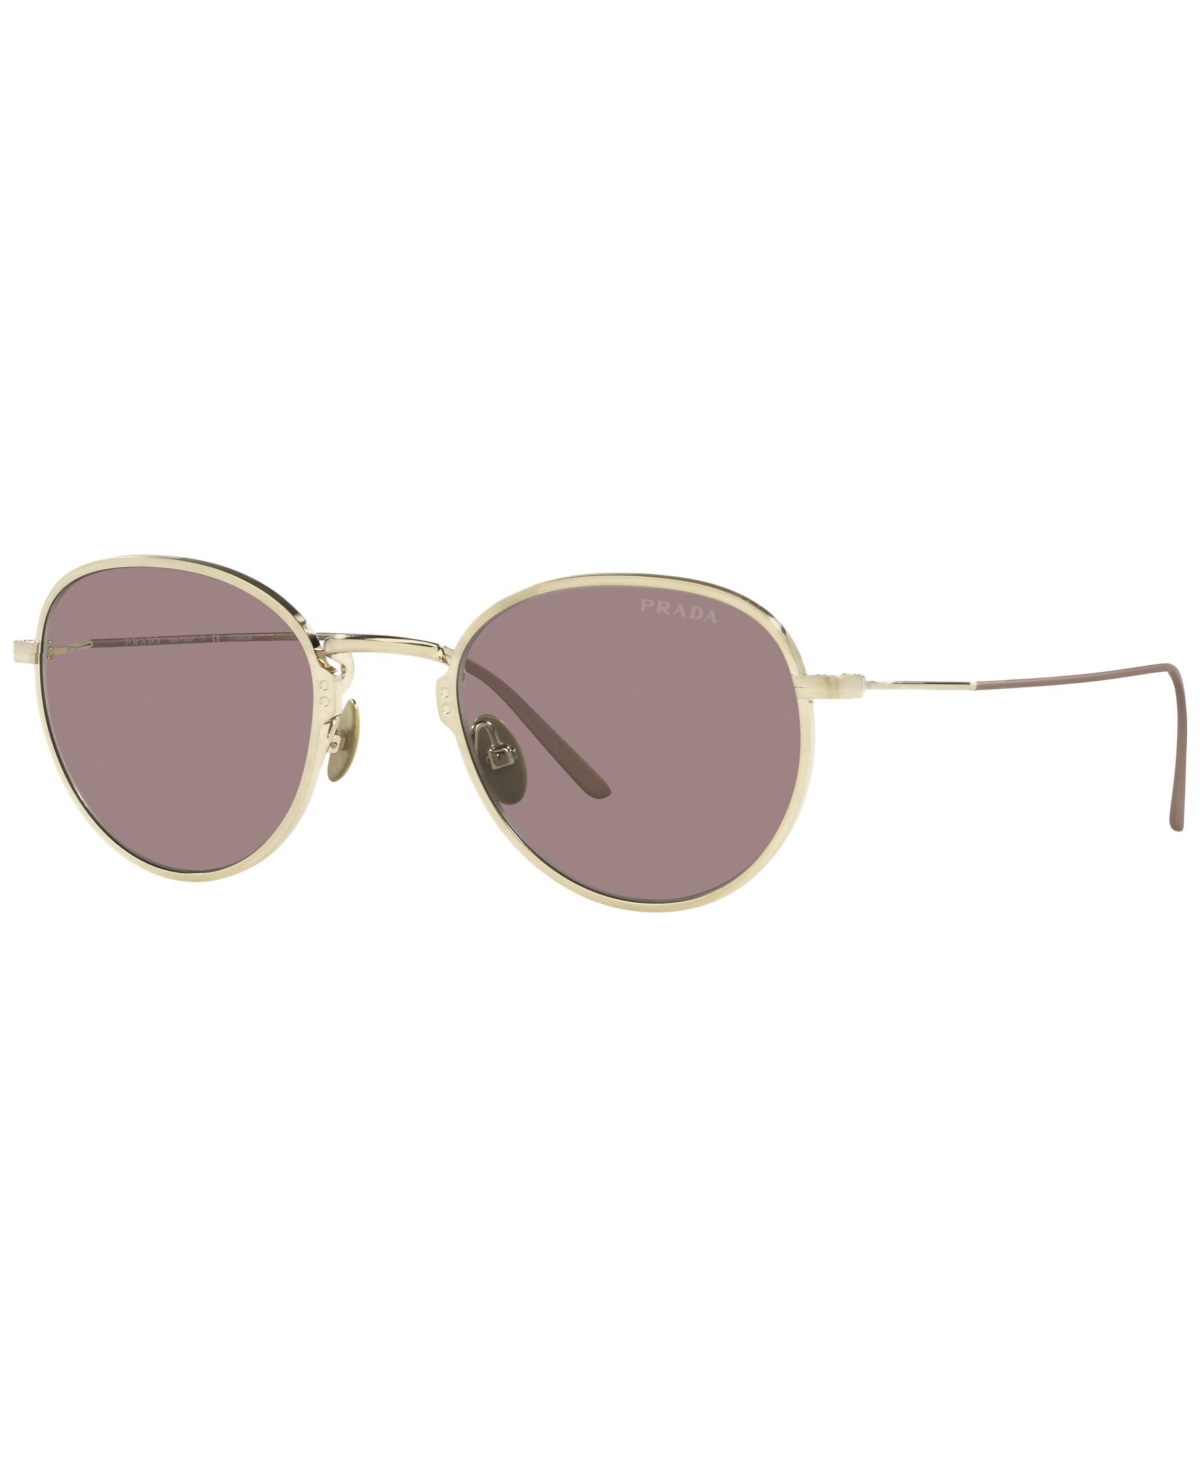 Prada Women's Sunglasses, Pr 53ws 50 In Satin Pale Gold-tone